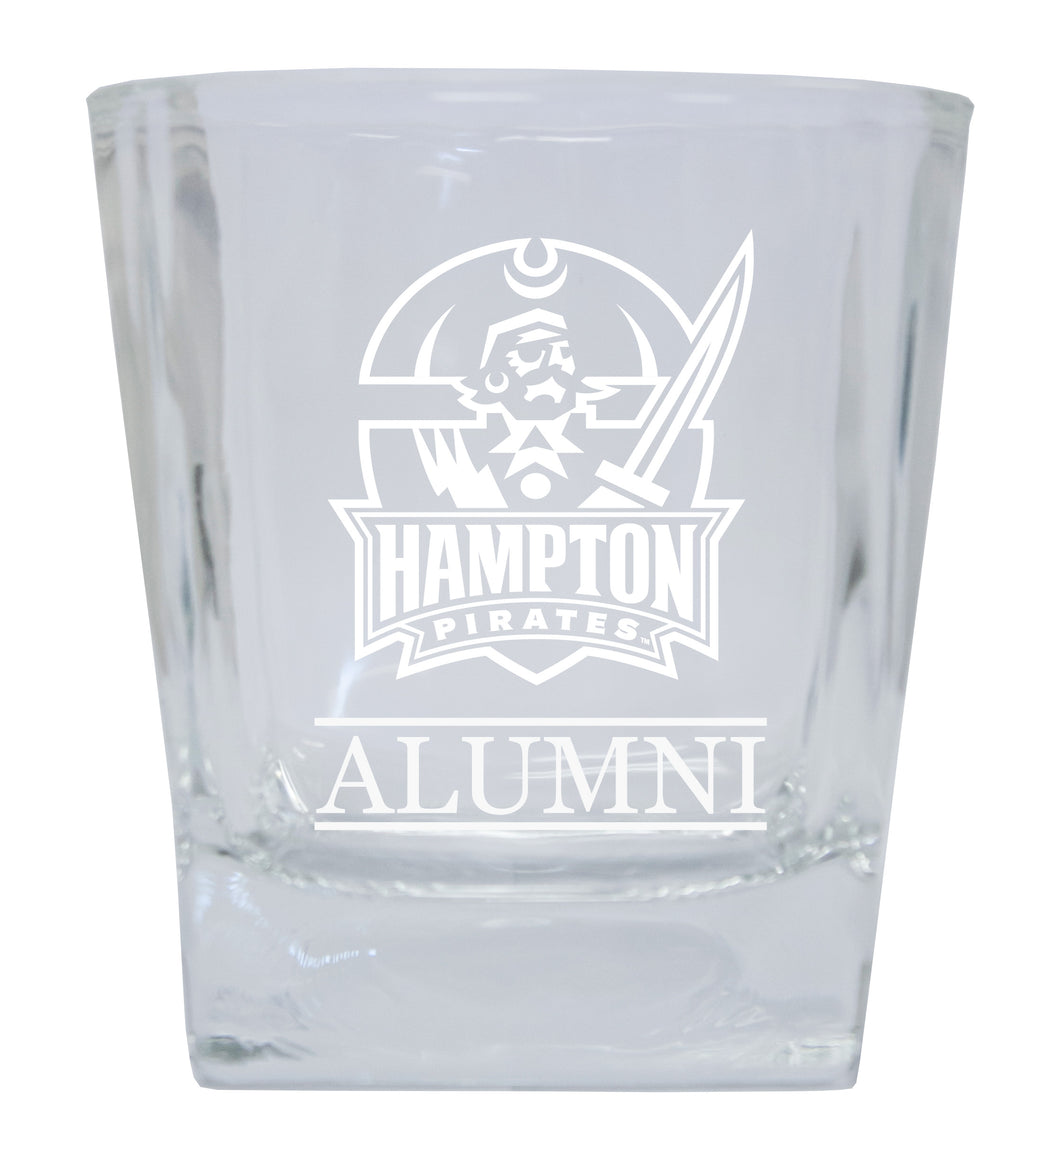 Hampton University Alumni Elegance - 5 oz Etched Shooter Glass Tumbler 4-Pack